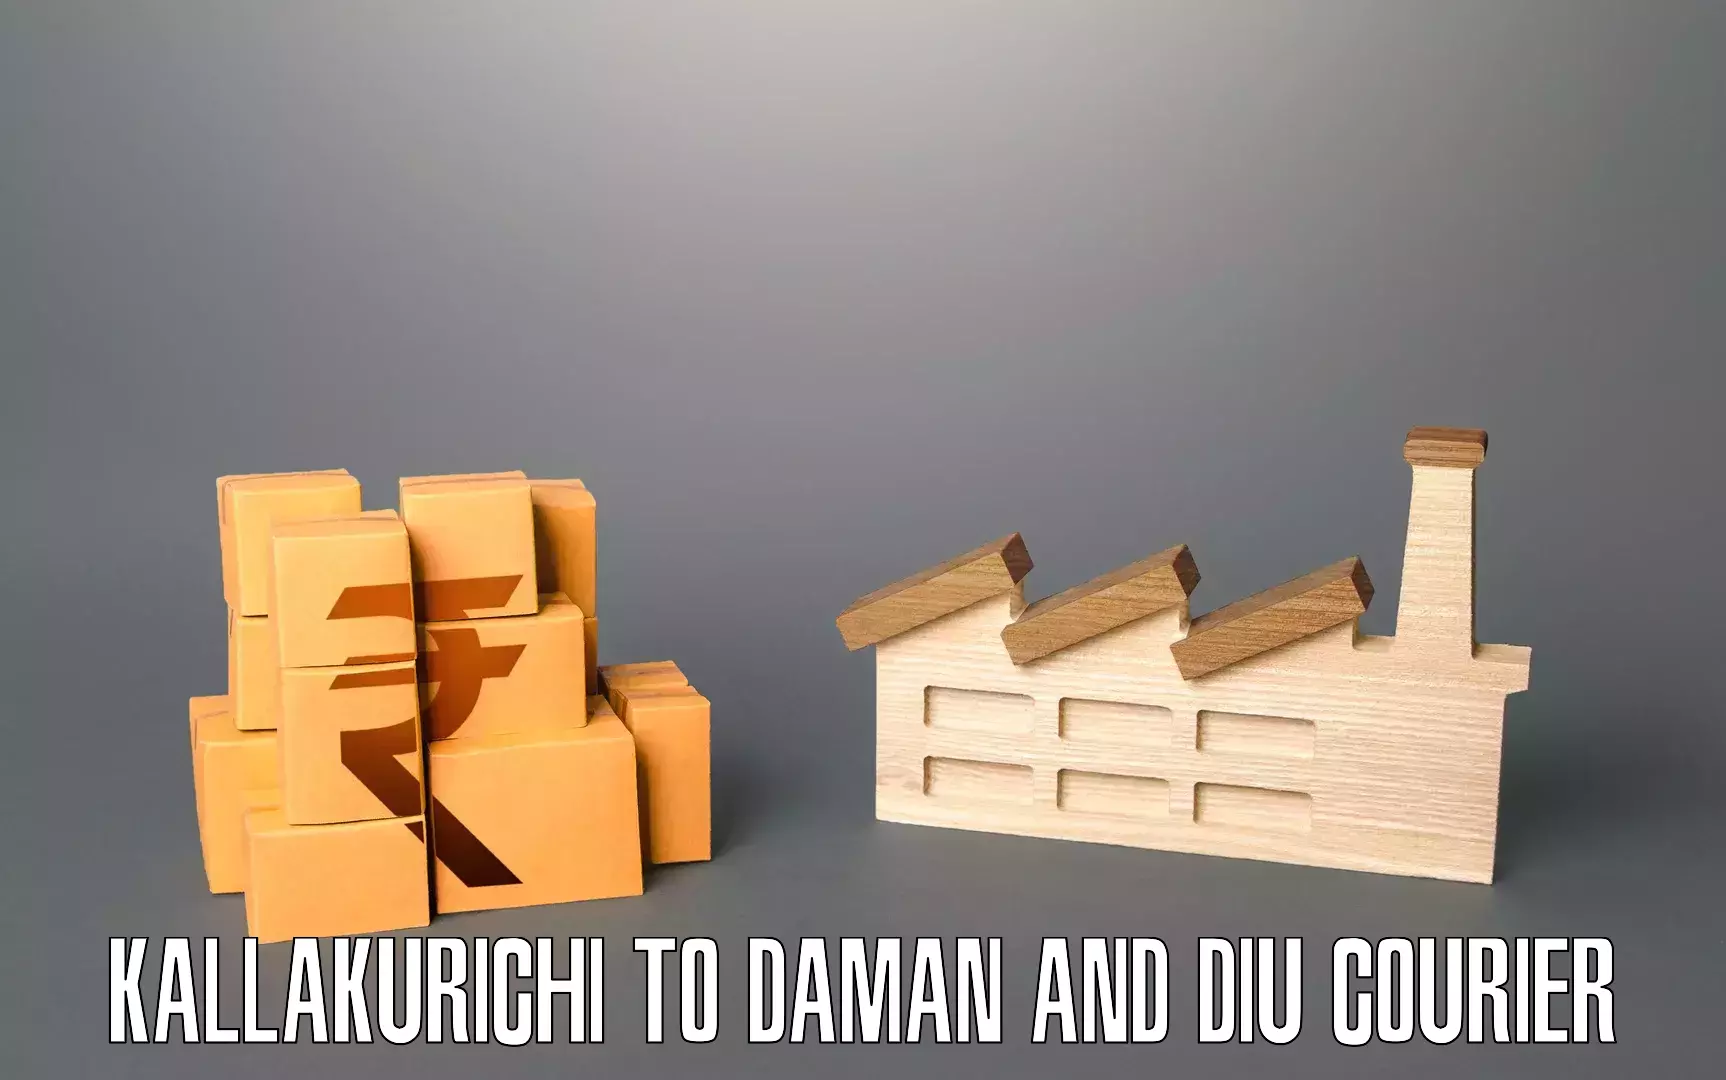 Professional moving company Kallakurichi to Diu